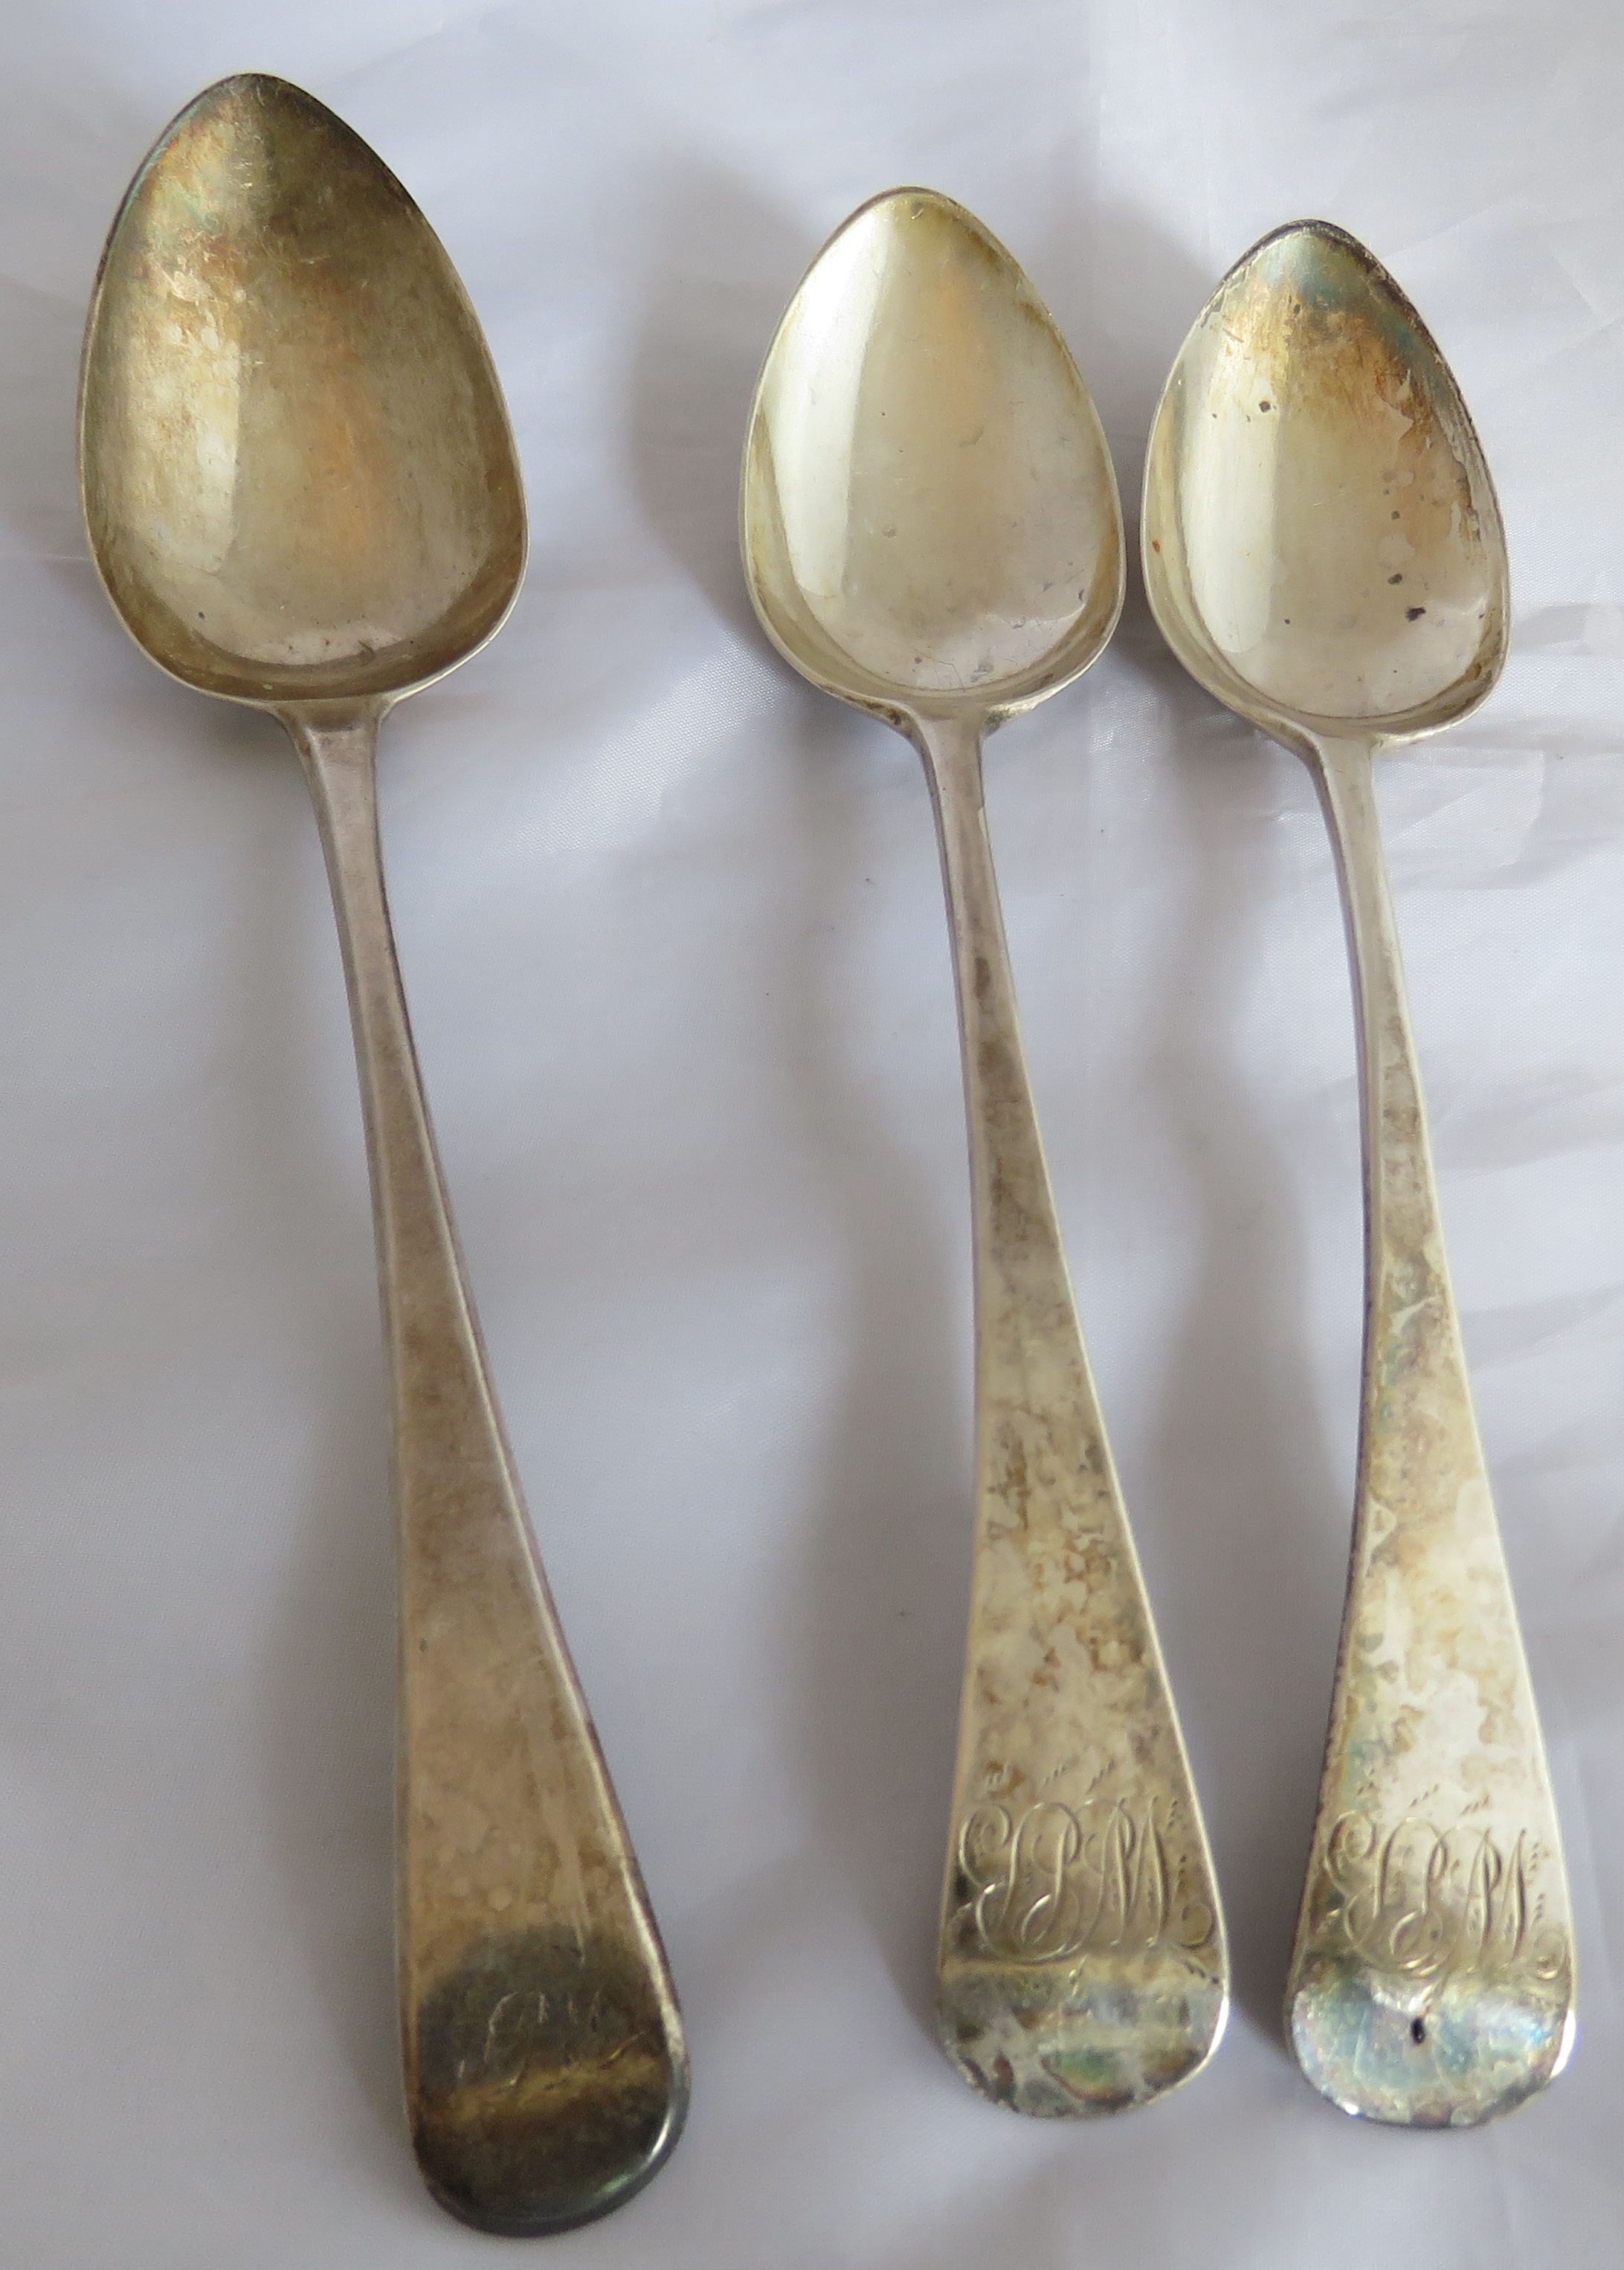 Georgian silver tablespoon London 1809, maker Peter & William Bateman. Weight 61 grams, measures 8.